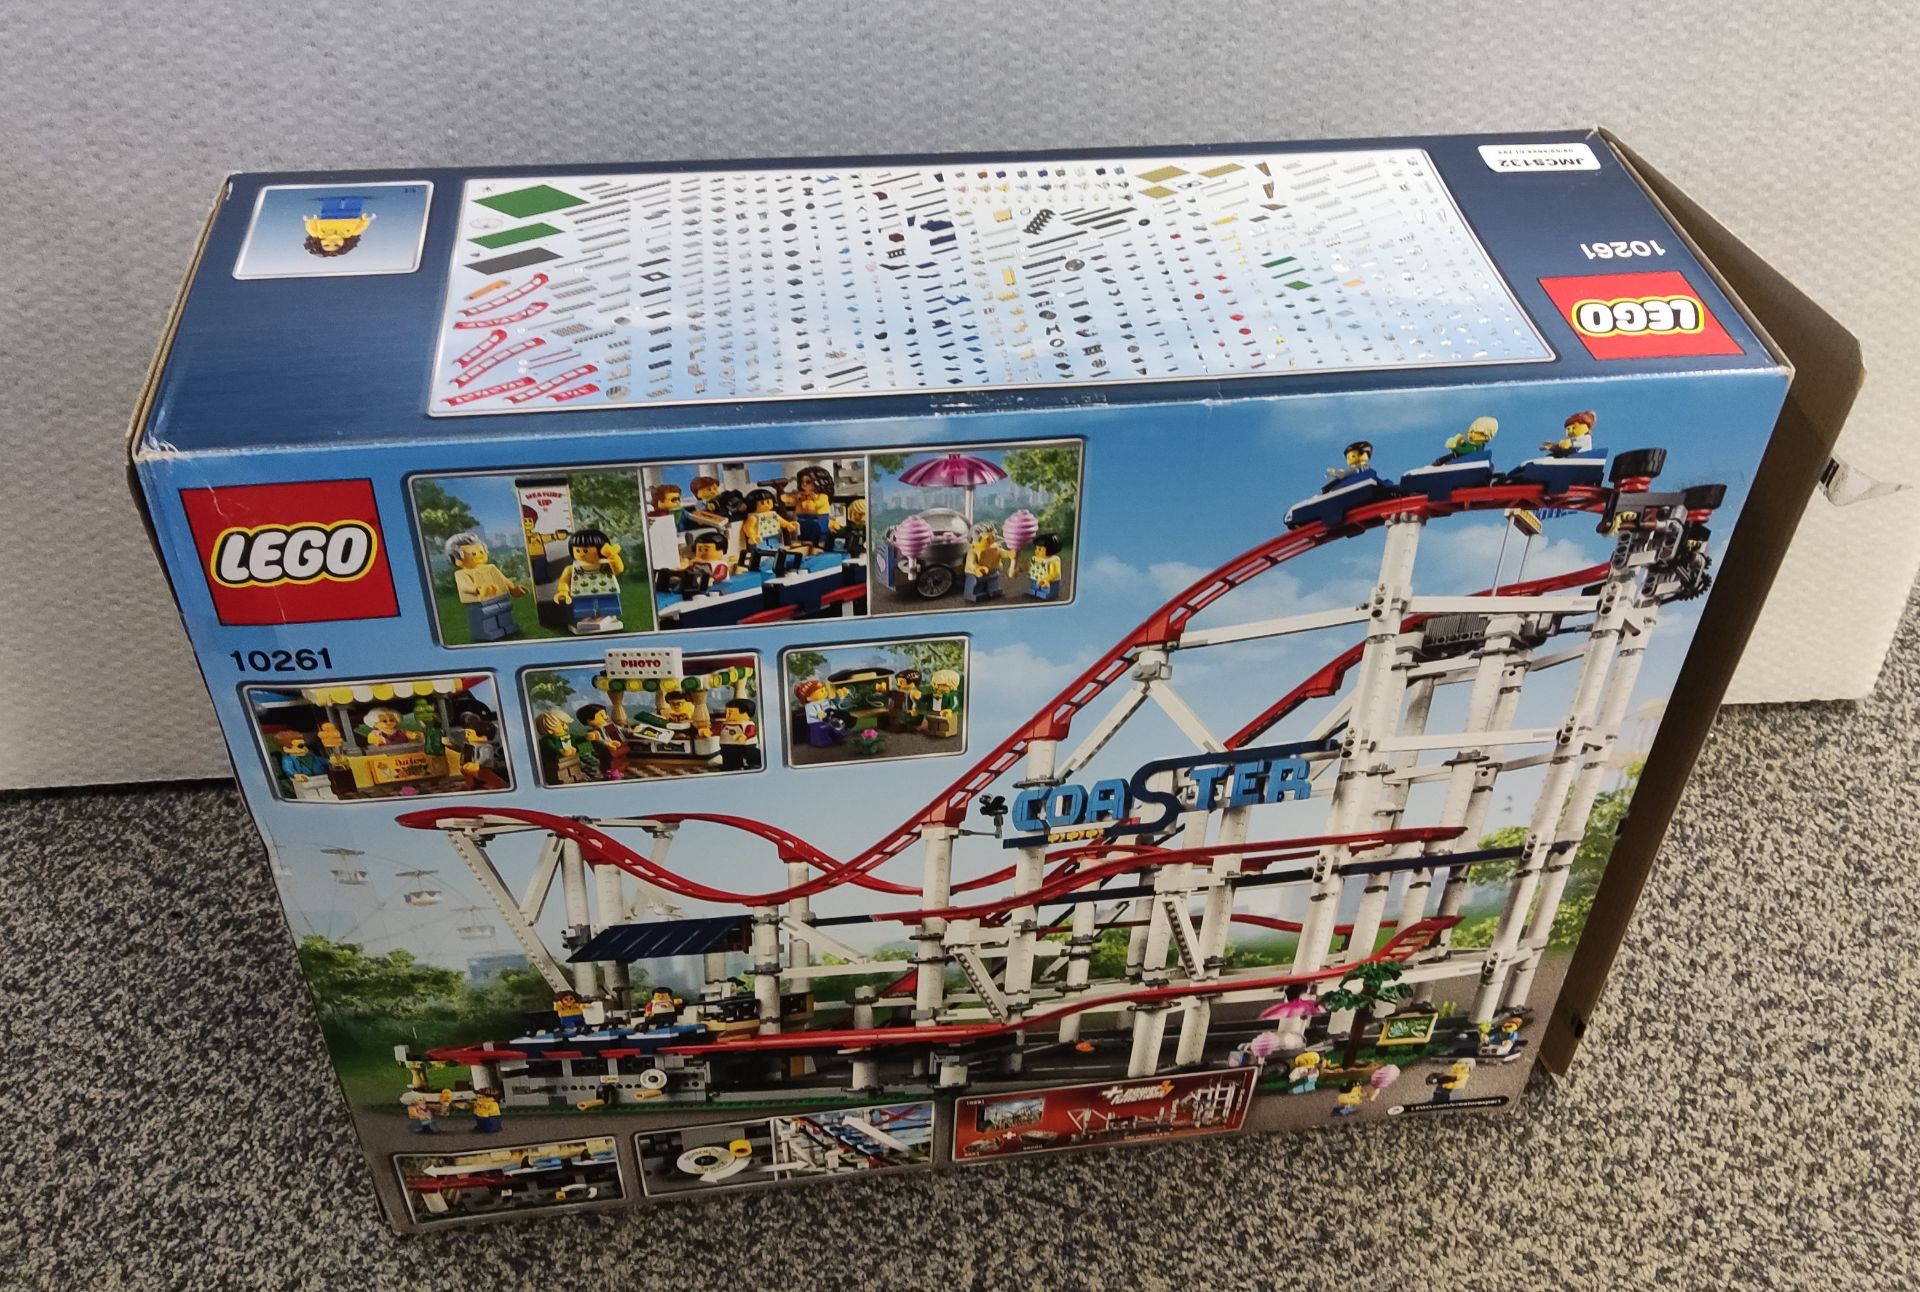 1 x Lego Creator Roller Coaster - Set # 10261 - New/Boxed - Image 5 of 5